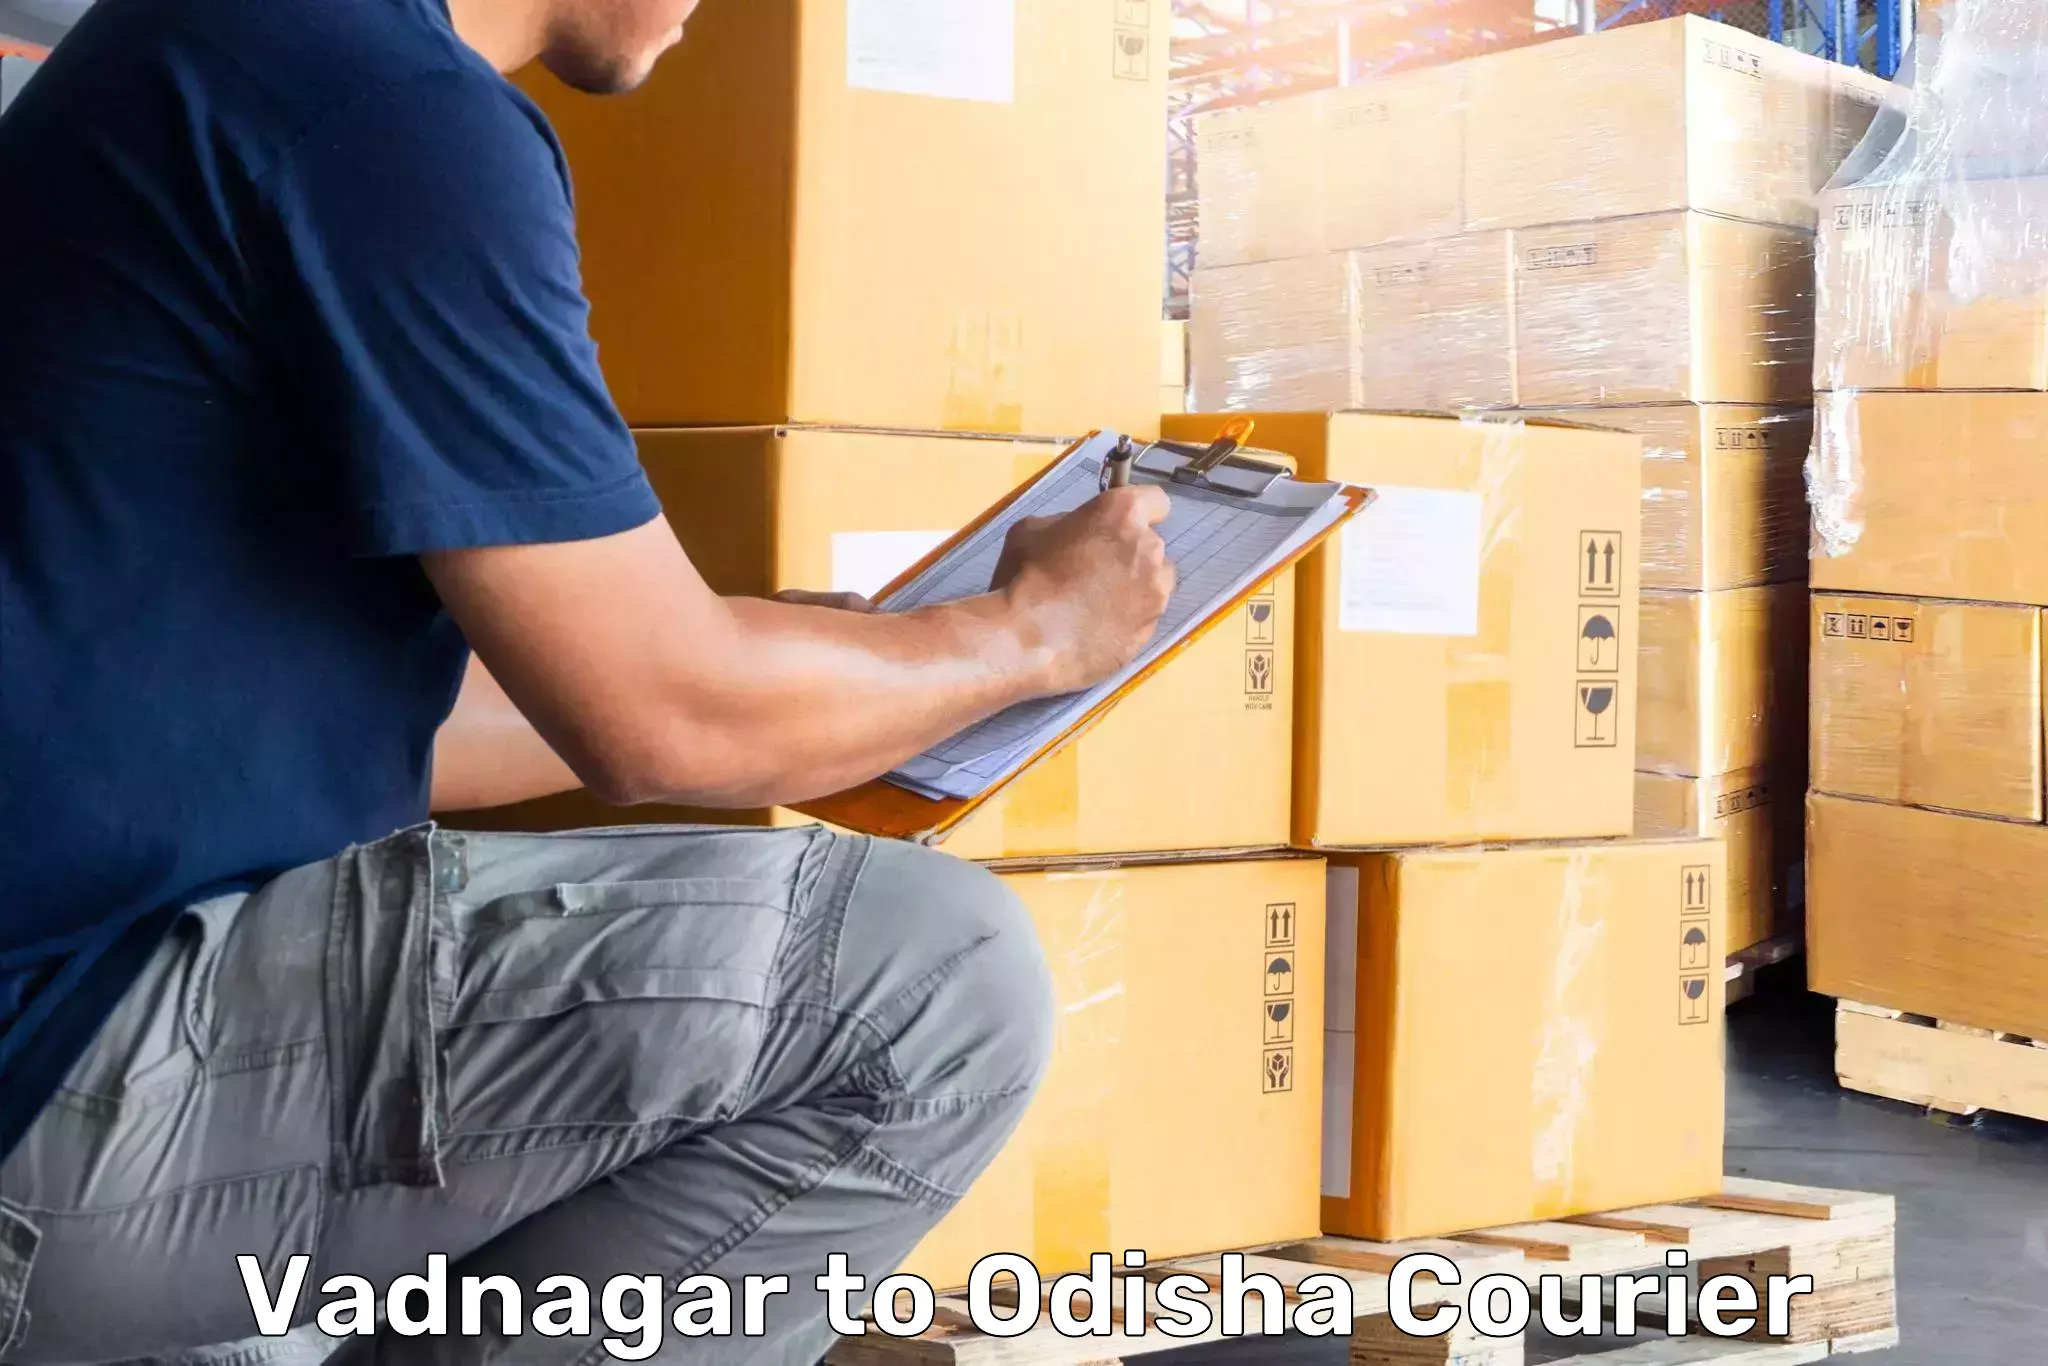 Luggage delivery app Vadnagar to Turanga